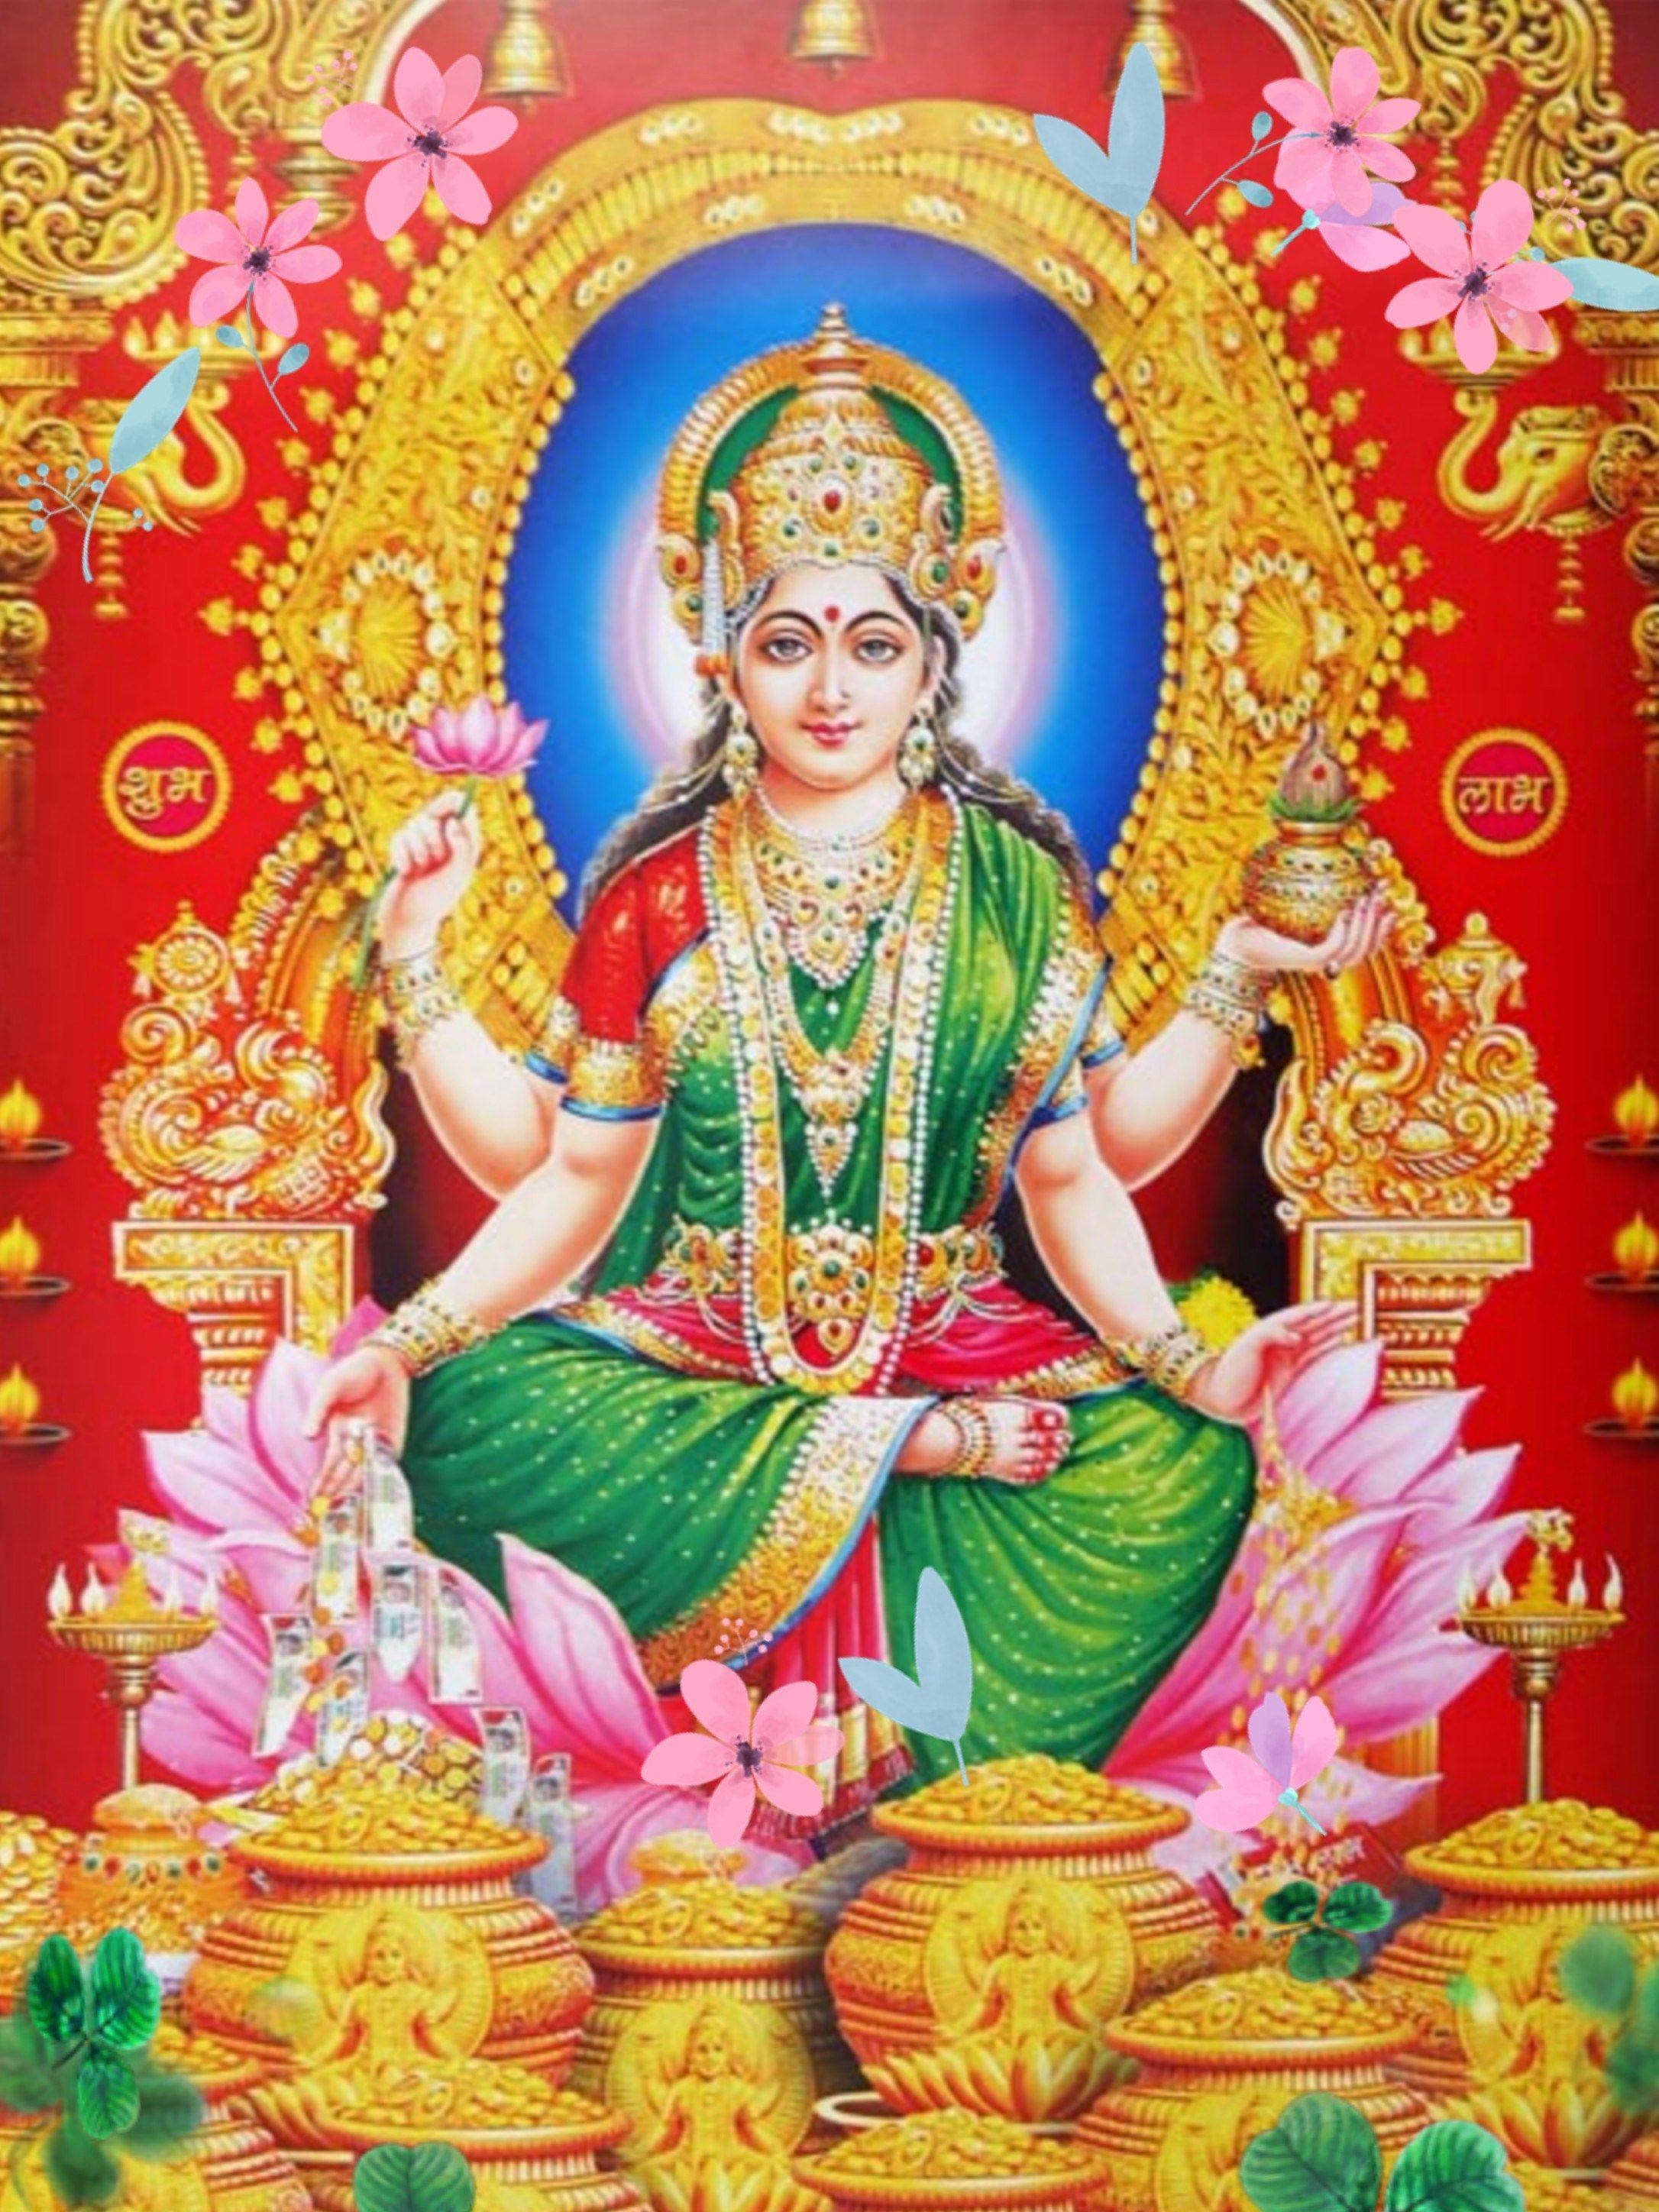 51+ Good Morning Images With Goddess Lakshmi | लक्ष्मी माता